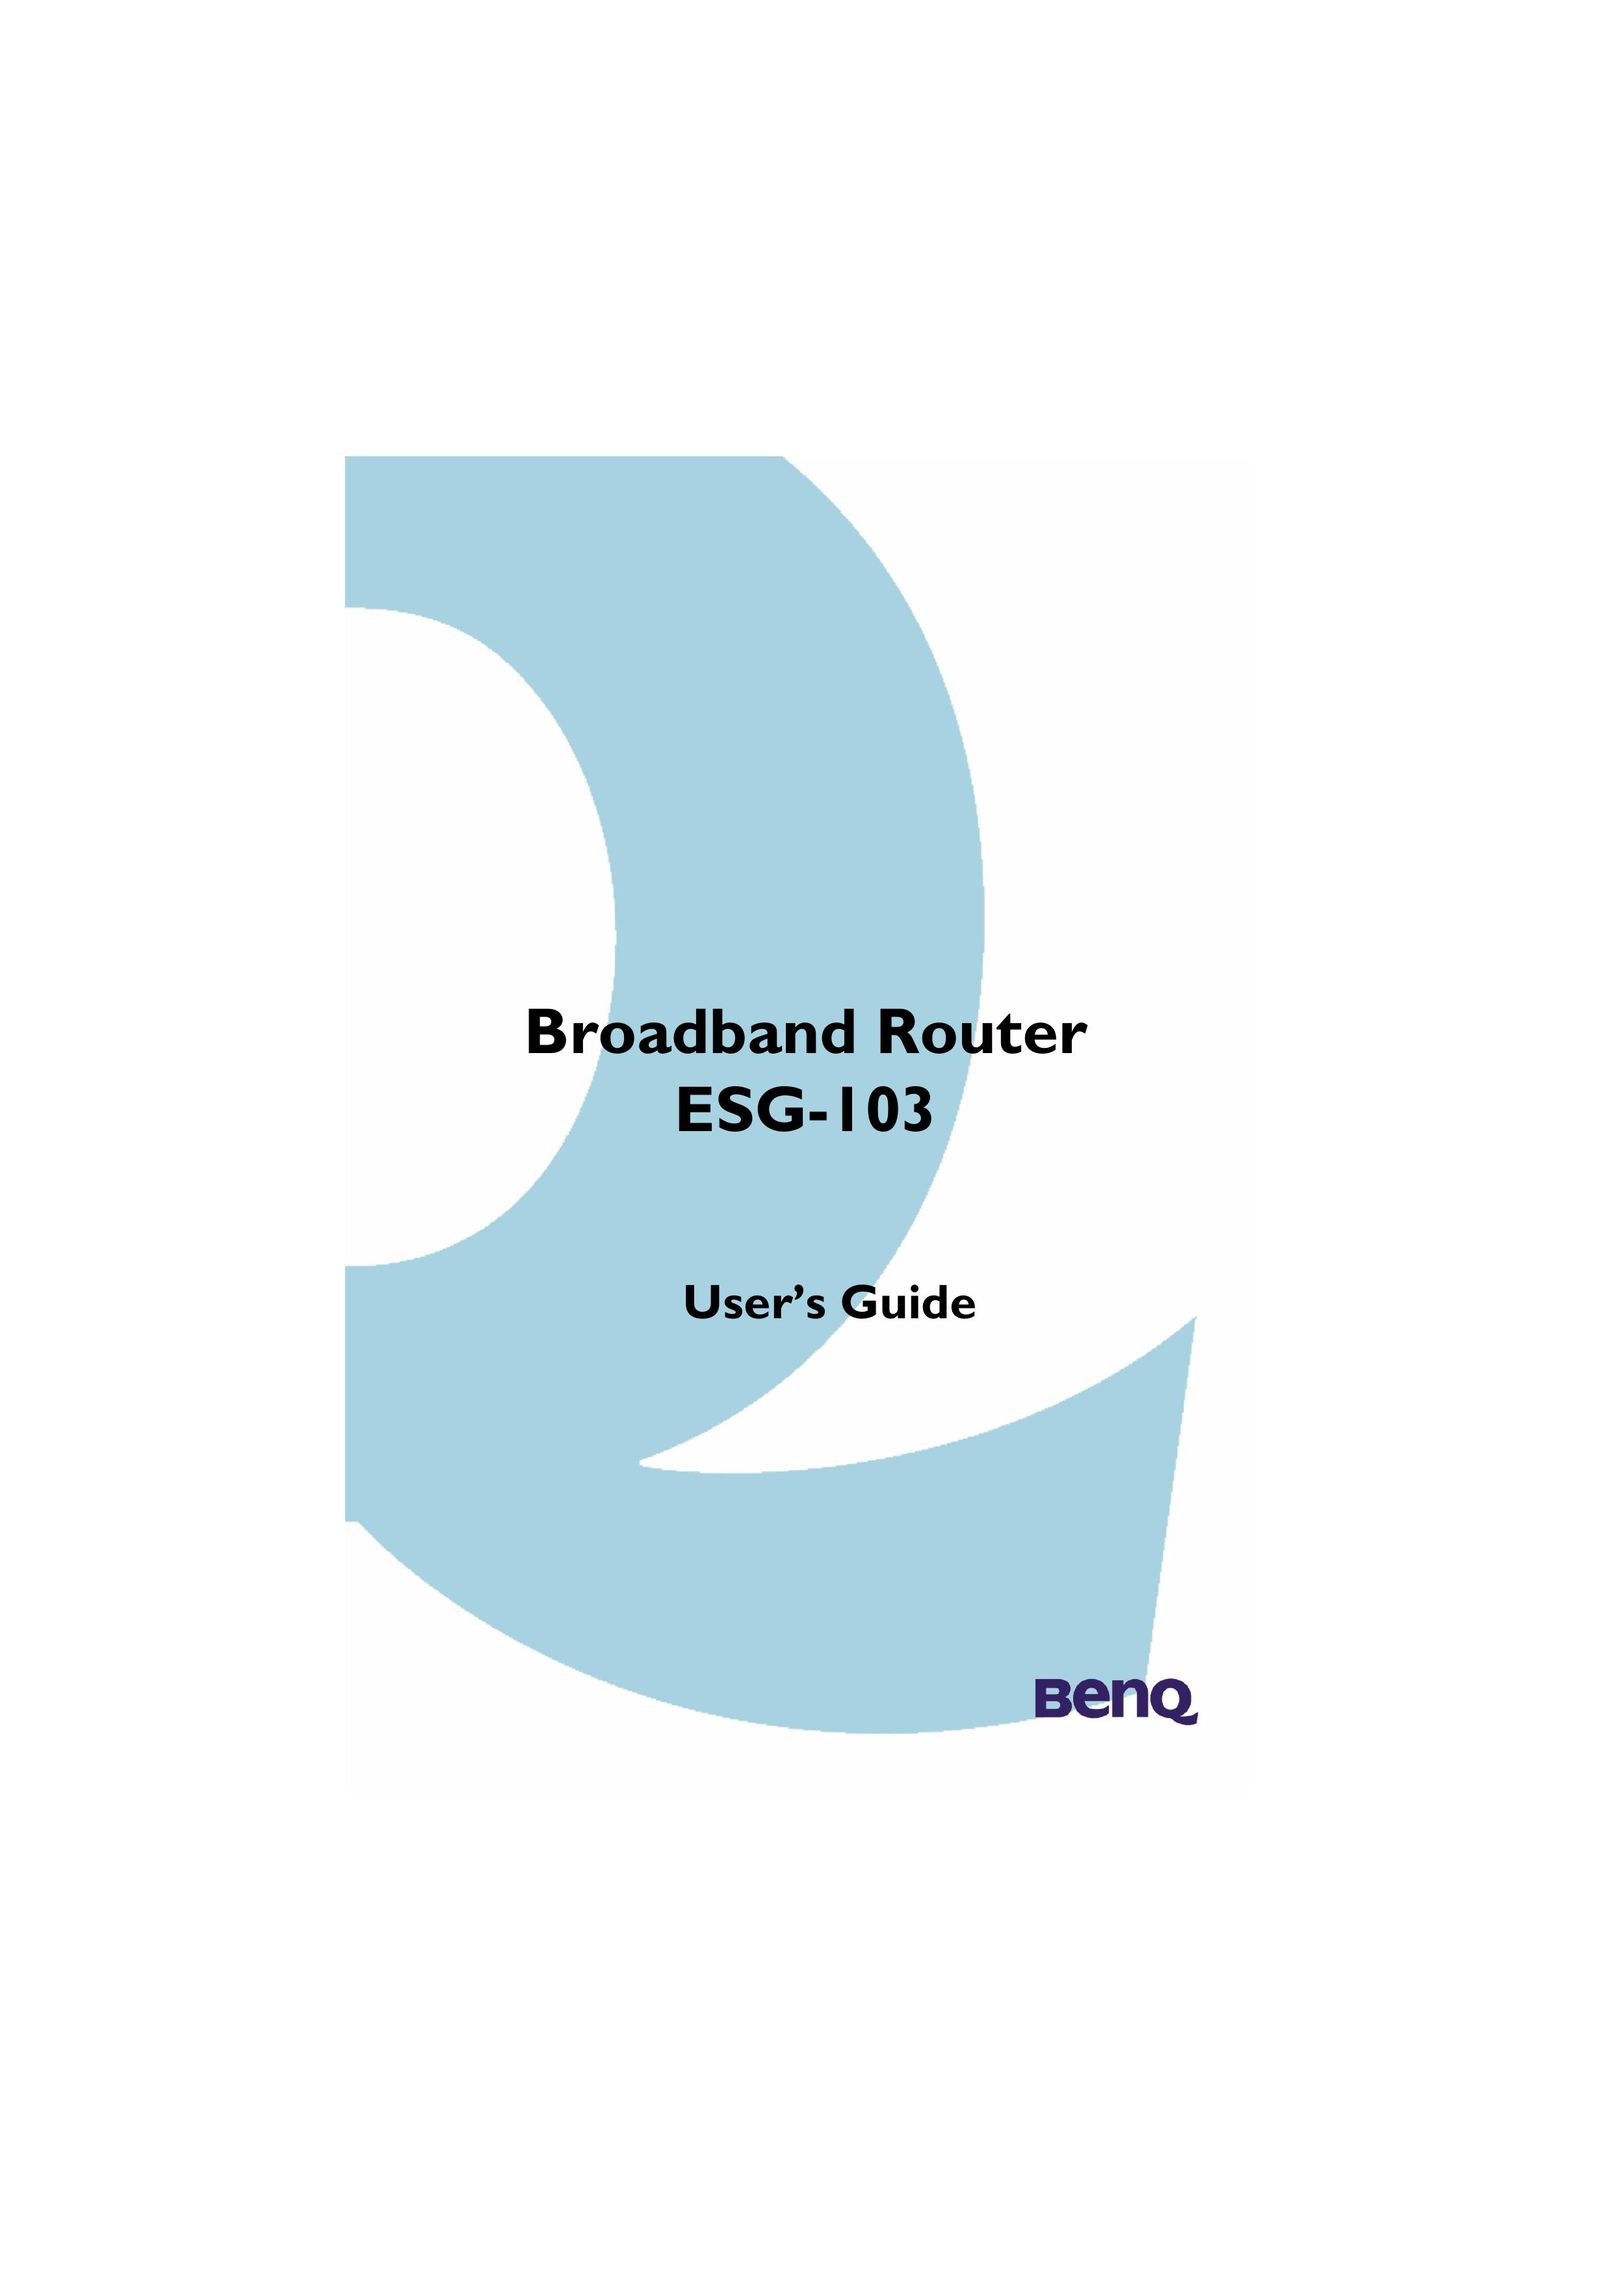 BenQ ESG-103 Network Router User Manual